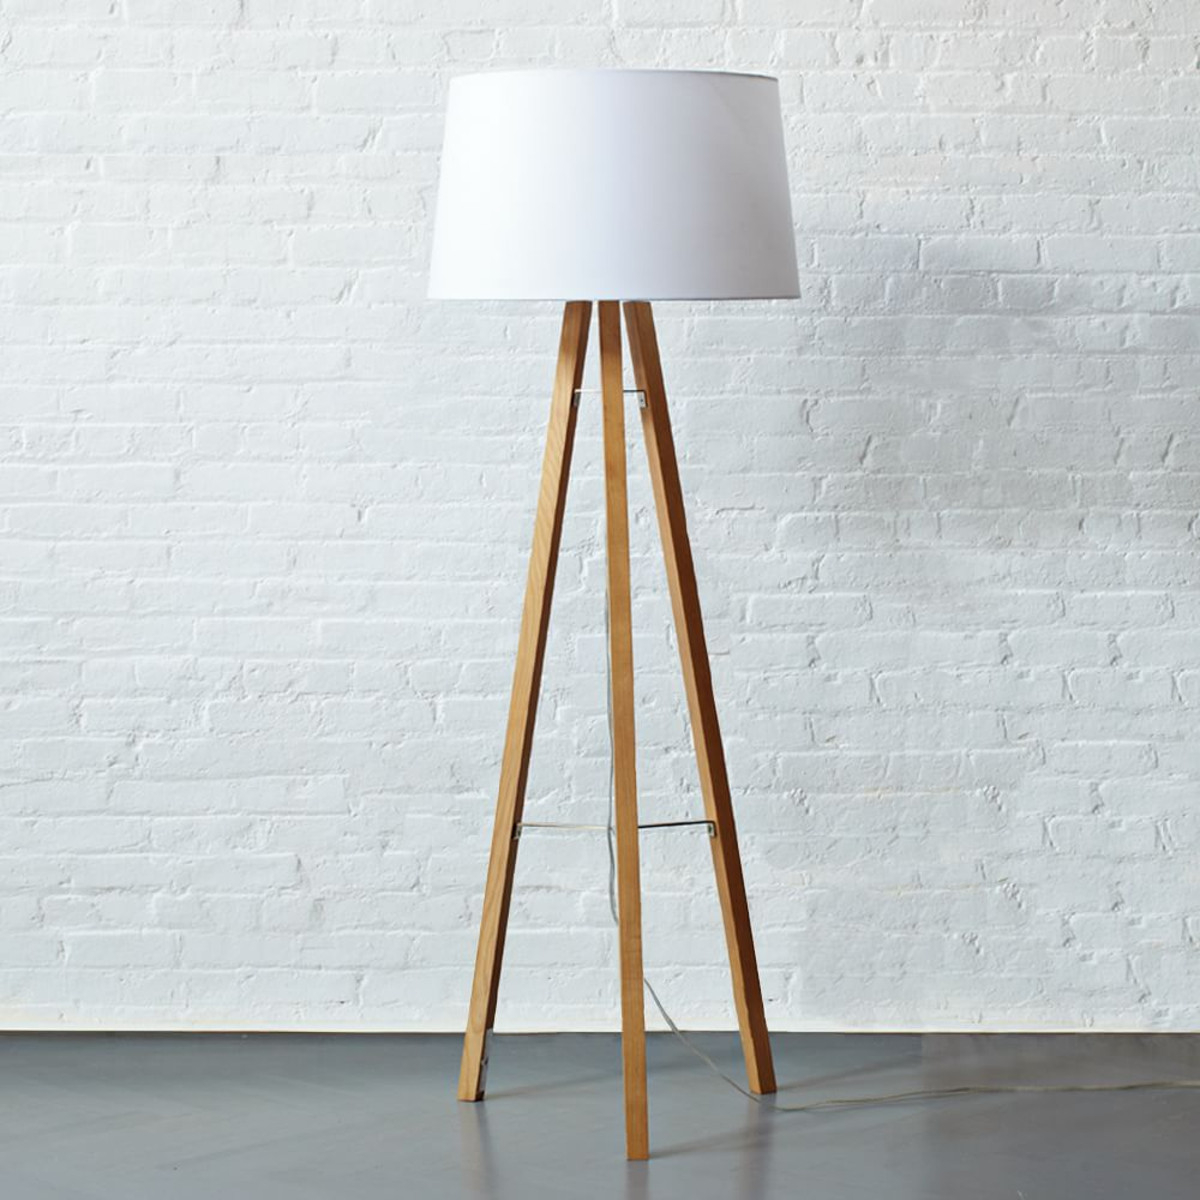 Contemporary Modern Wood Floor Lamp Nordic Wooden Fabric regarding size 1200 X 1200